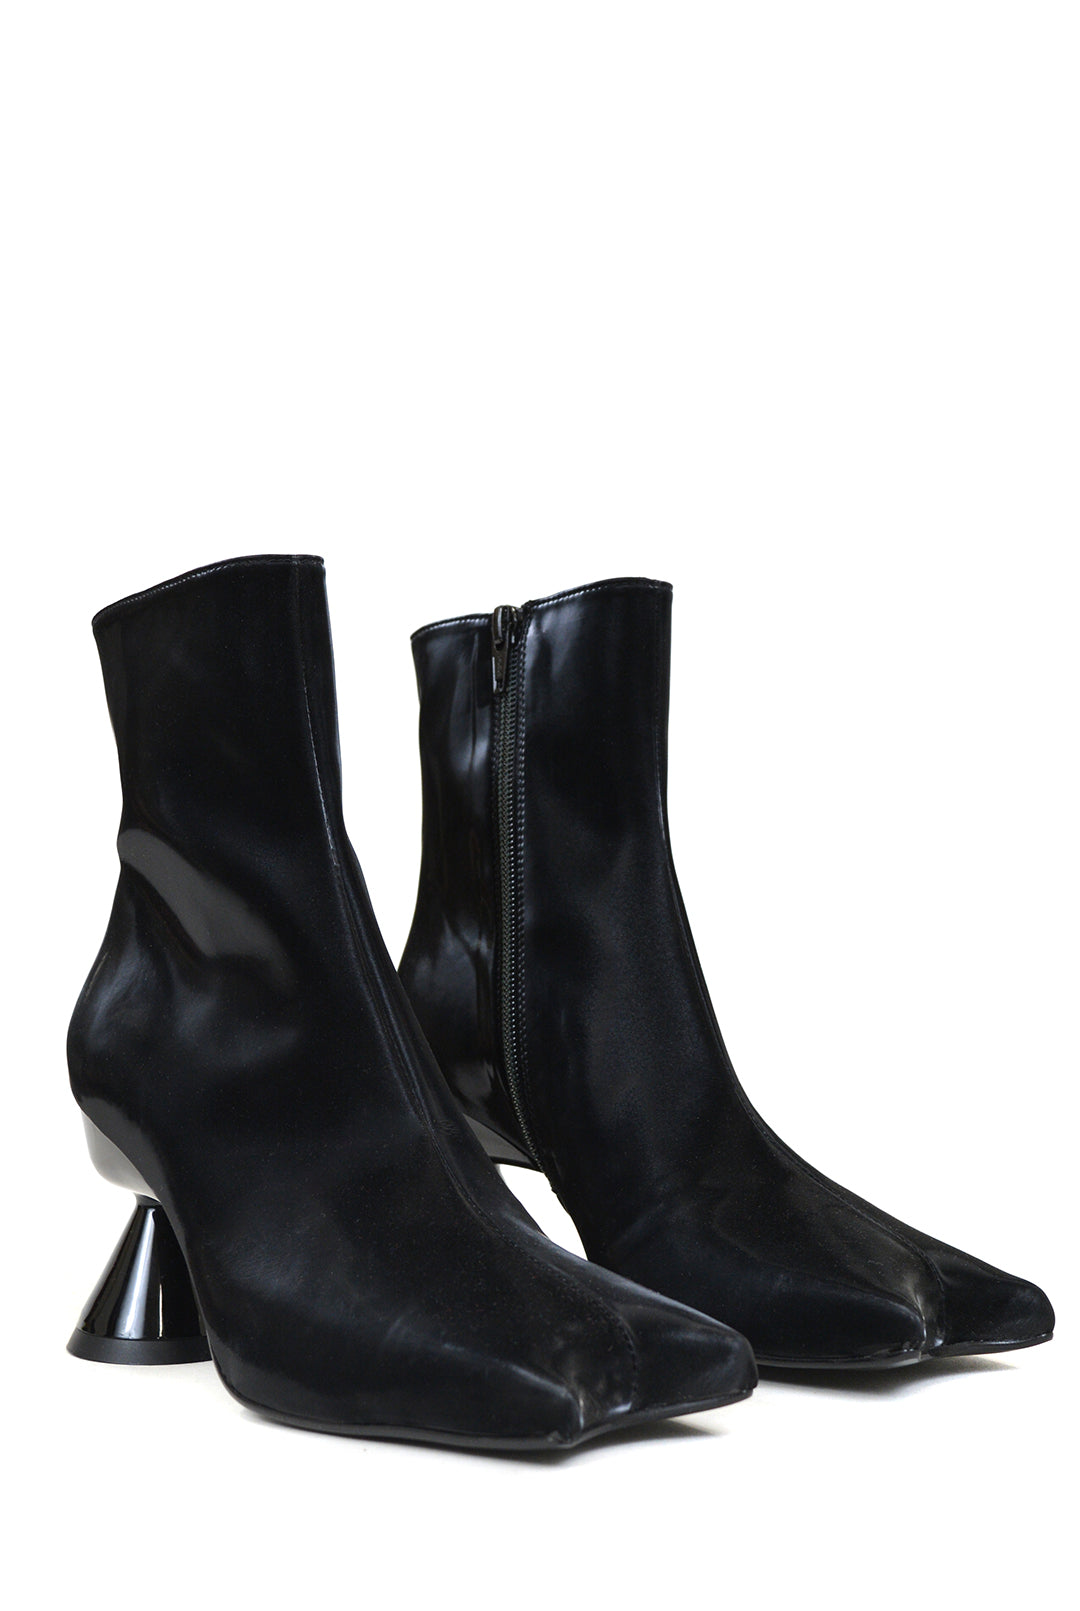 Paula Canovas del Vas Diablo Boots, Shiny Black